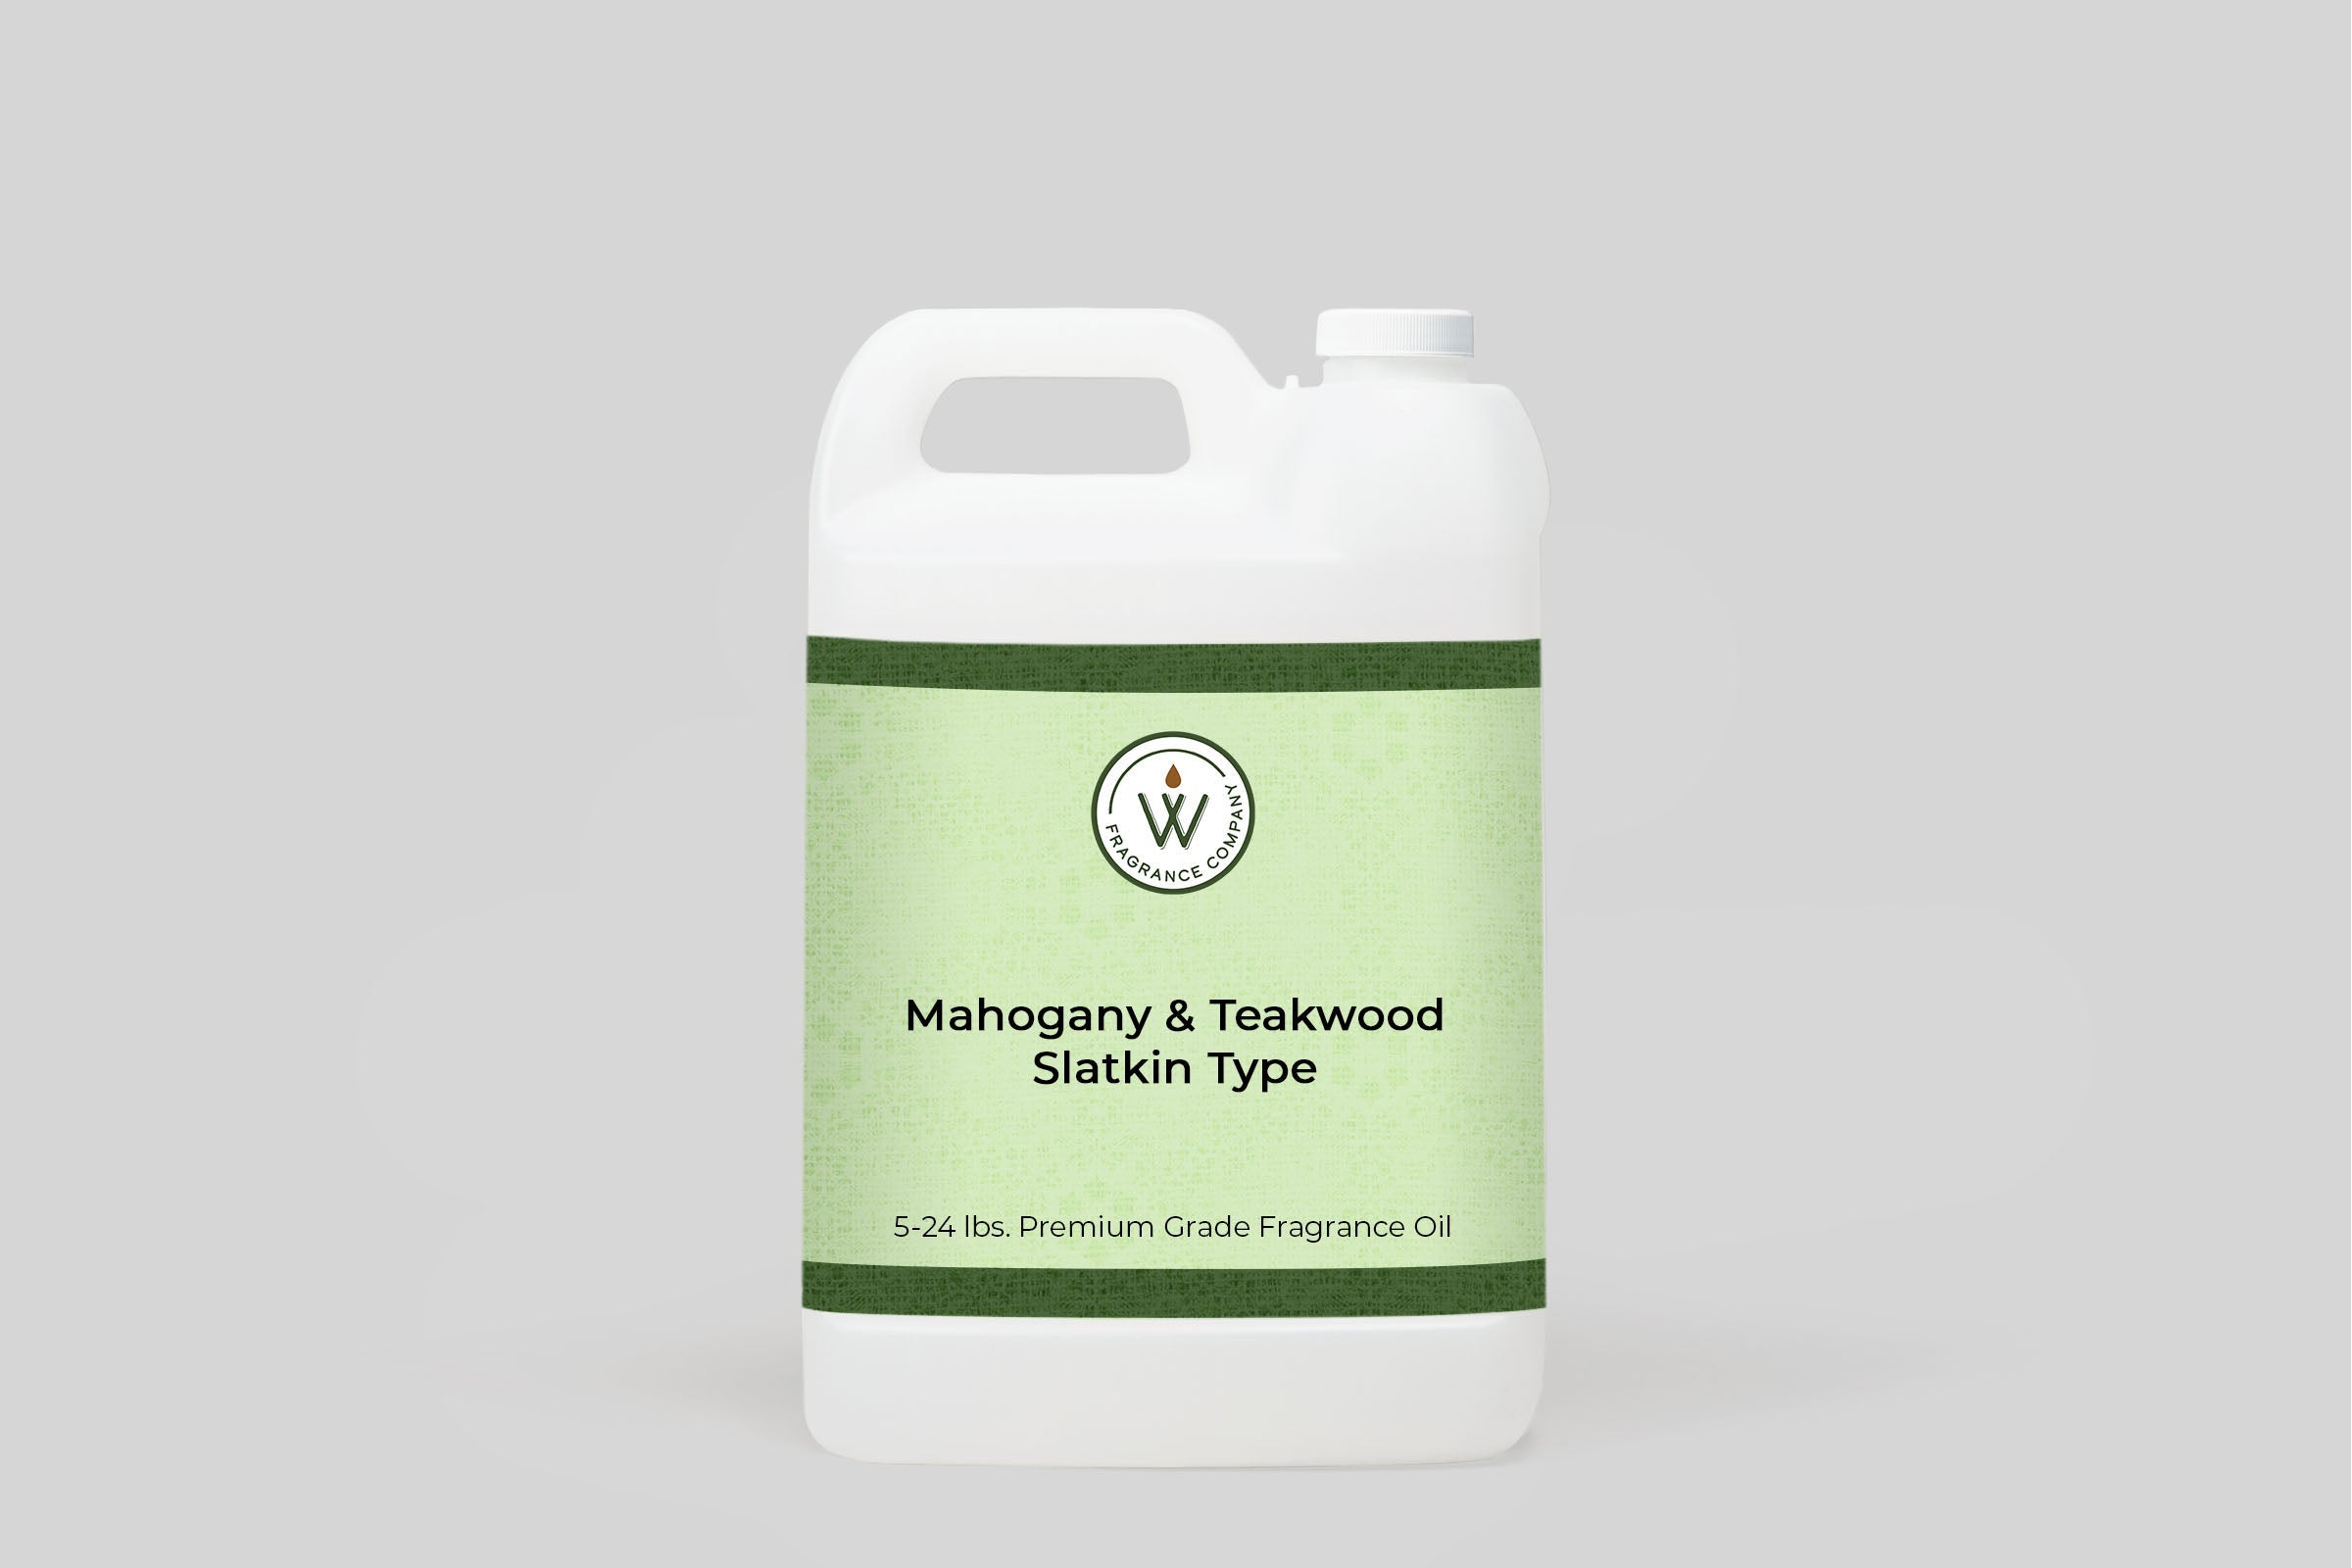 Mahogany & Teakwood Slatkin Type Fragrance Oil